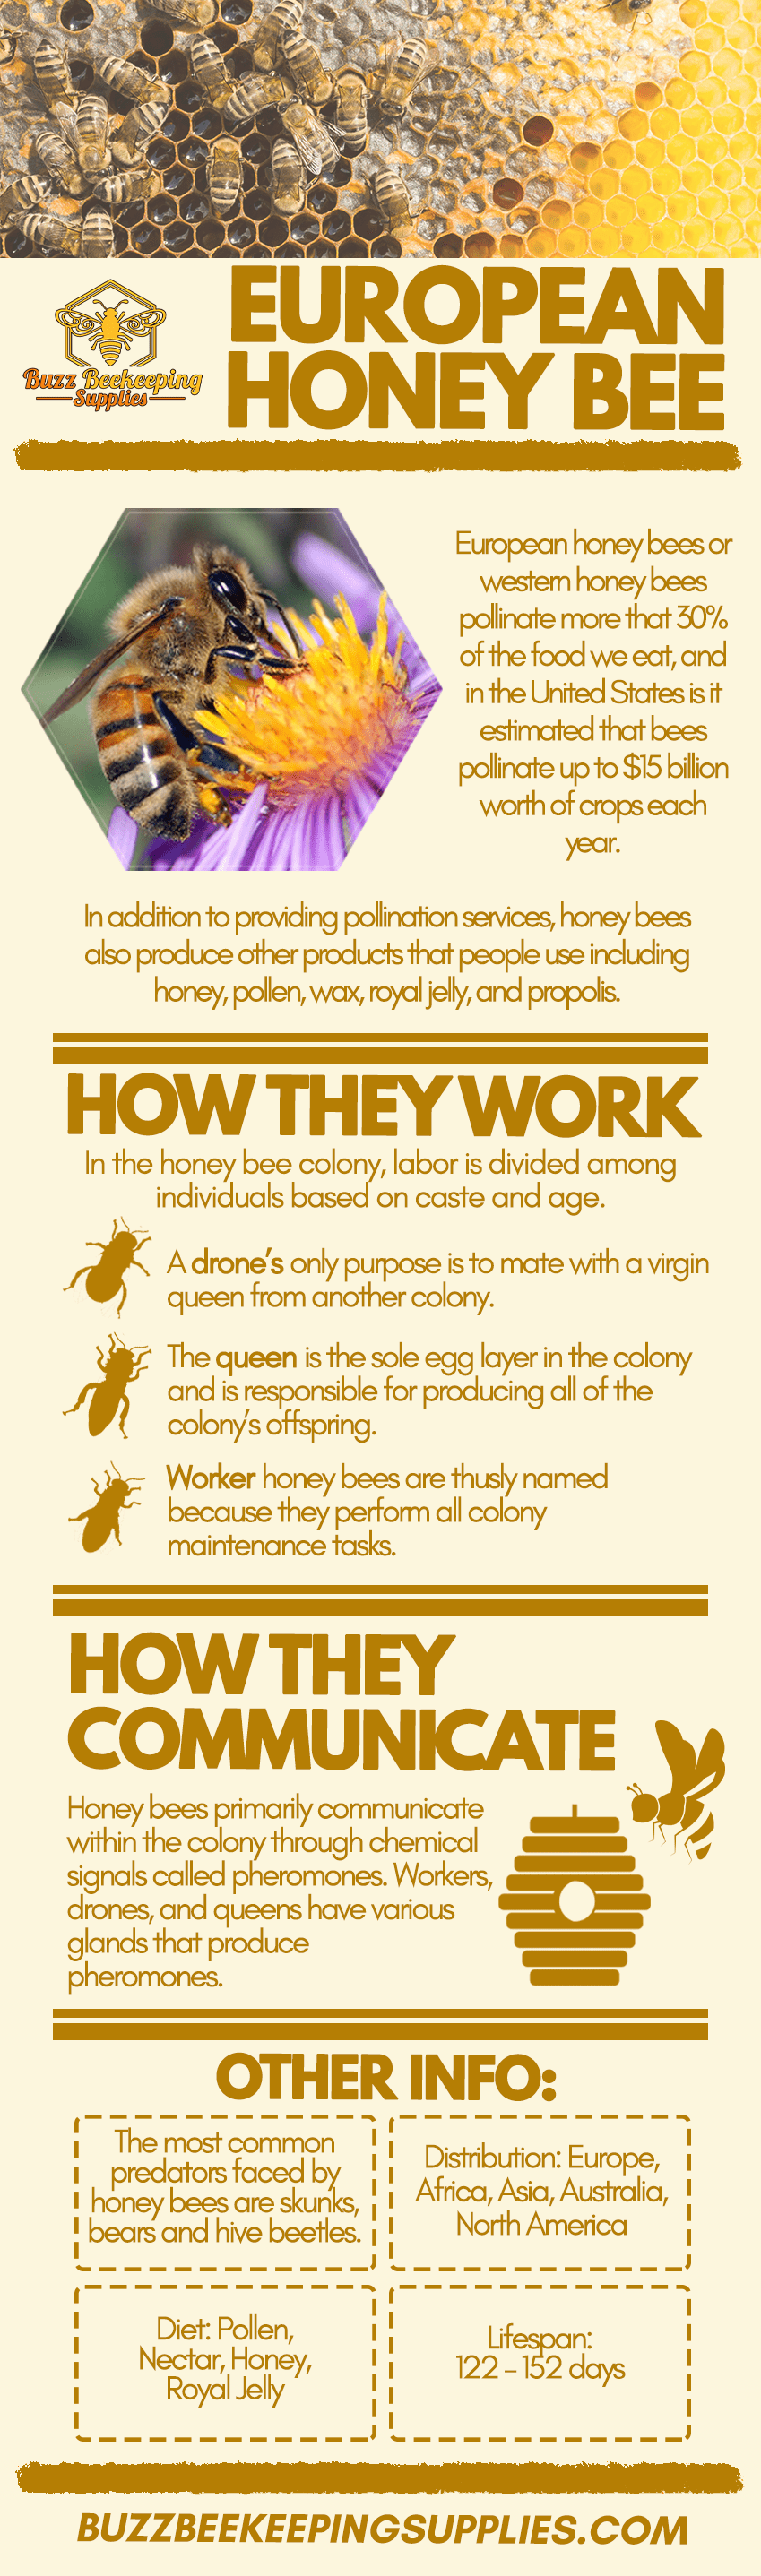 European Honey Bee - Buzz Beekeeping Supplies